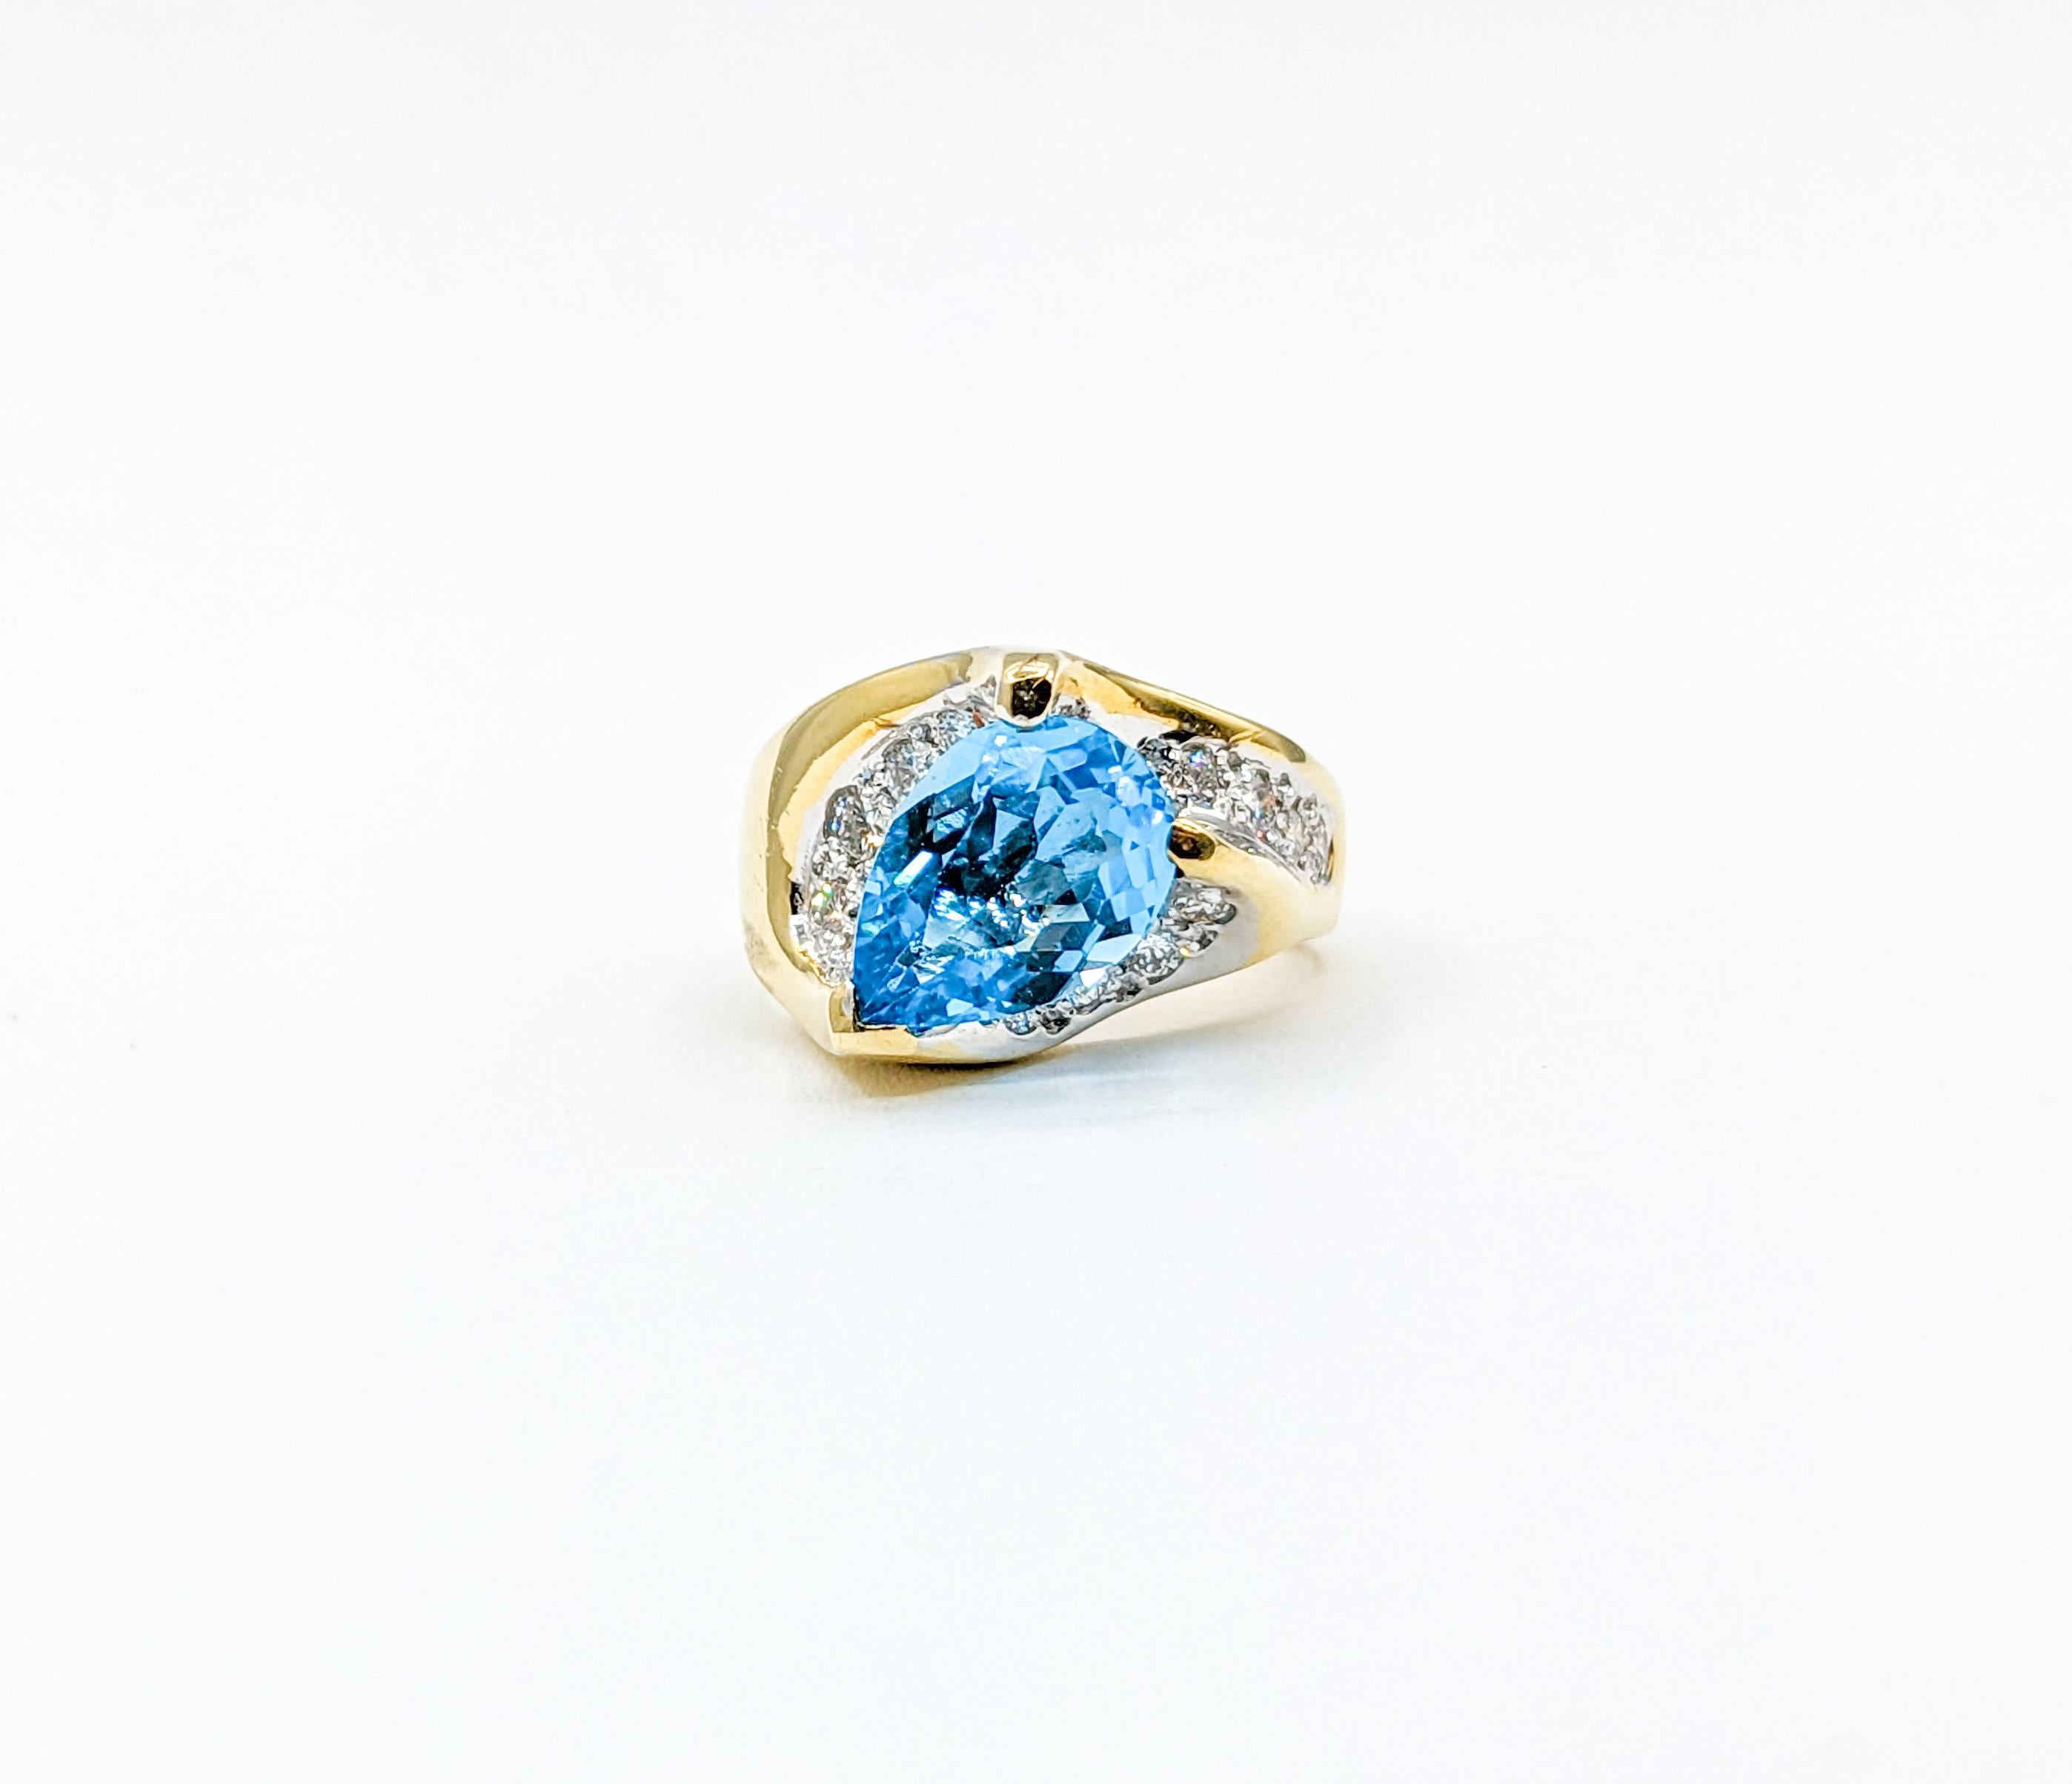 Artistic Blue Topaz & Diamond Cocktail Ring in 18k Gold For Sale 6